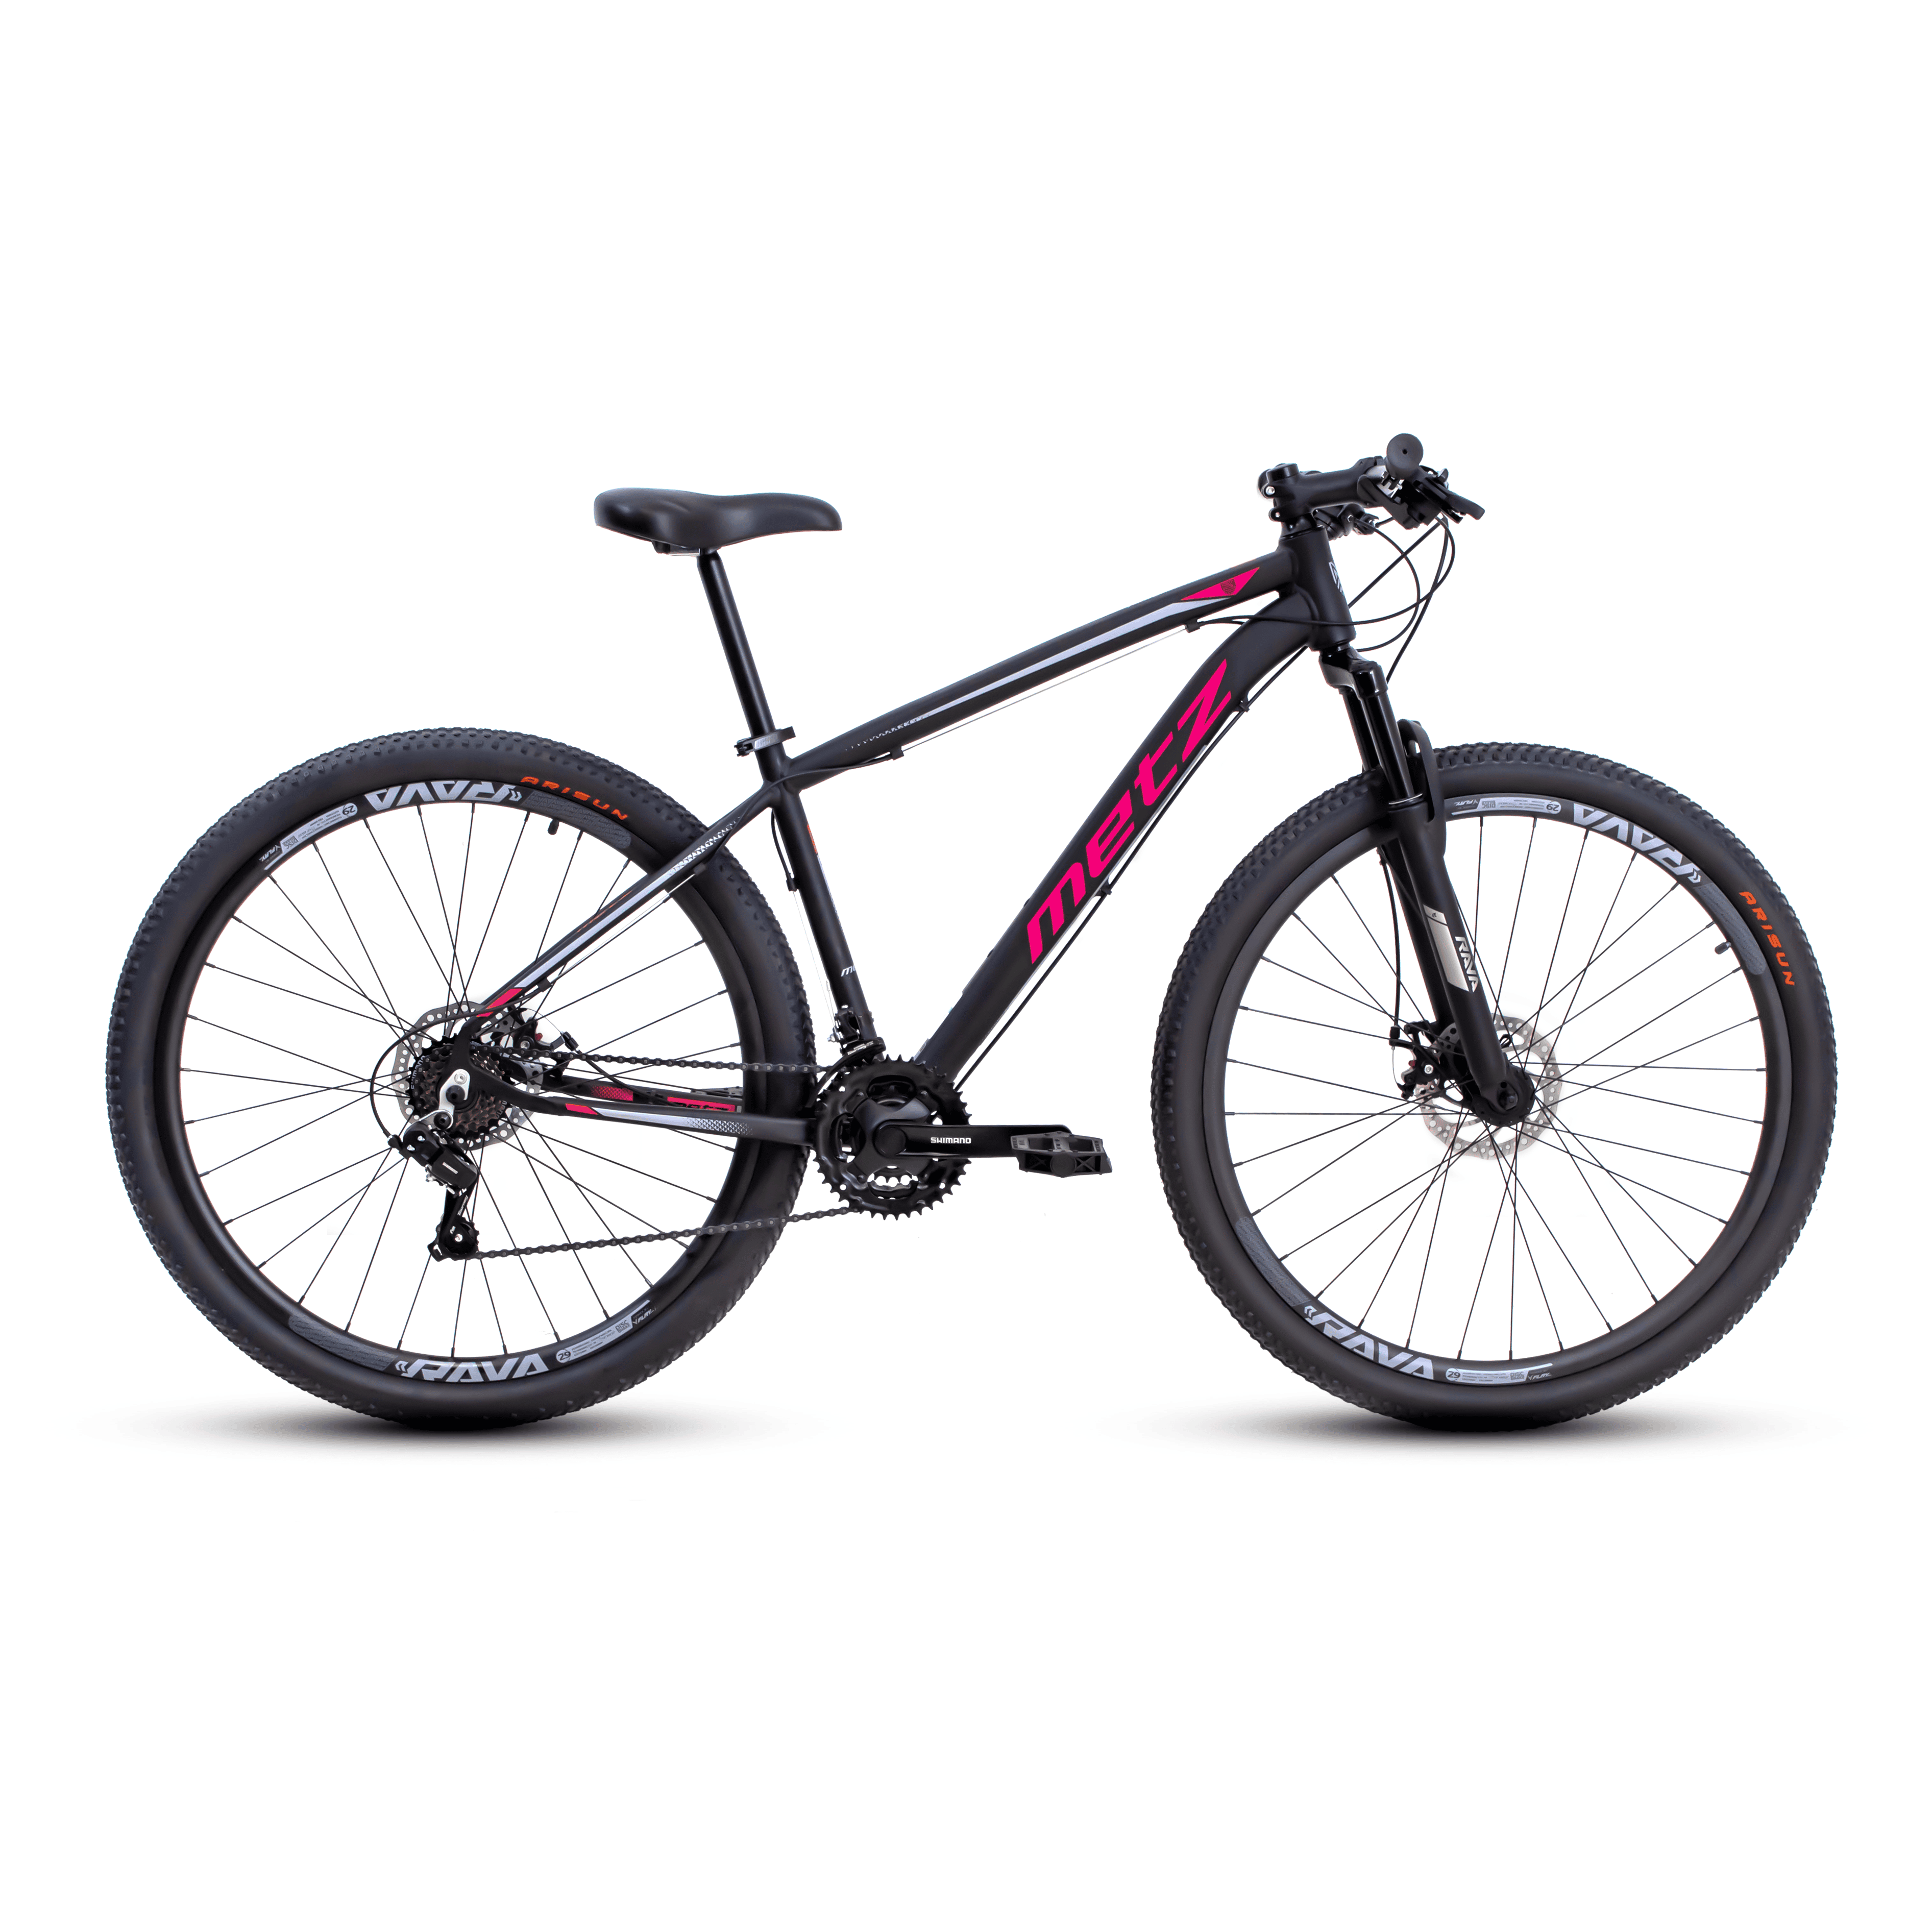 Bicicleta Metz Fuse Plus | 21V - Preto/Pink, 15.5"